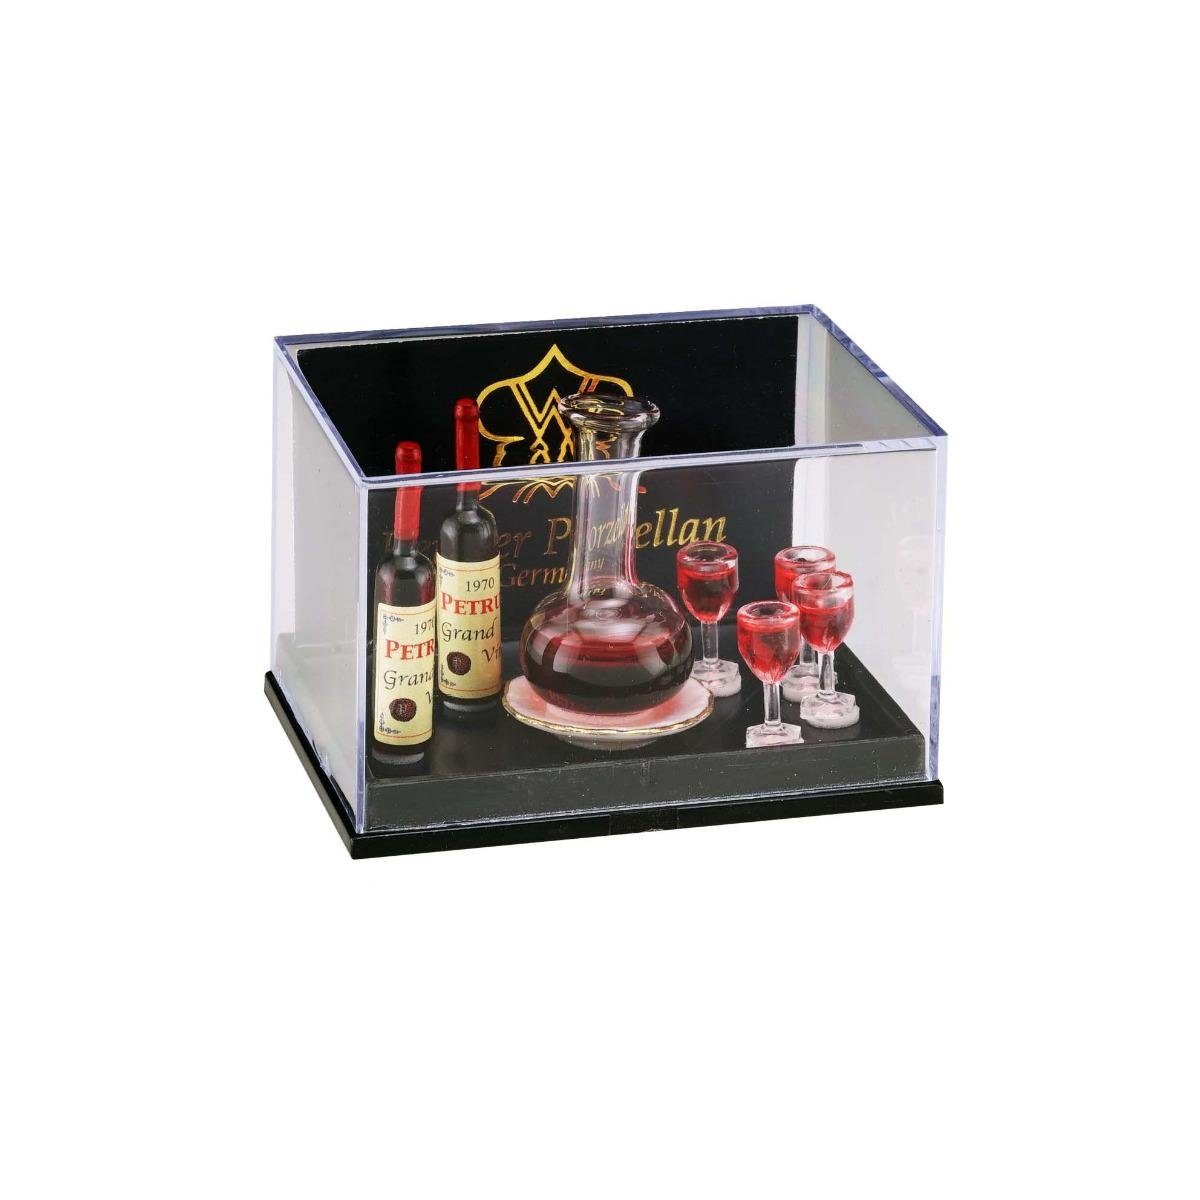 Dekofigur Weindekanter, Miniatur - Reutter 001.757/5 Porzellan